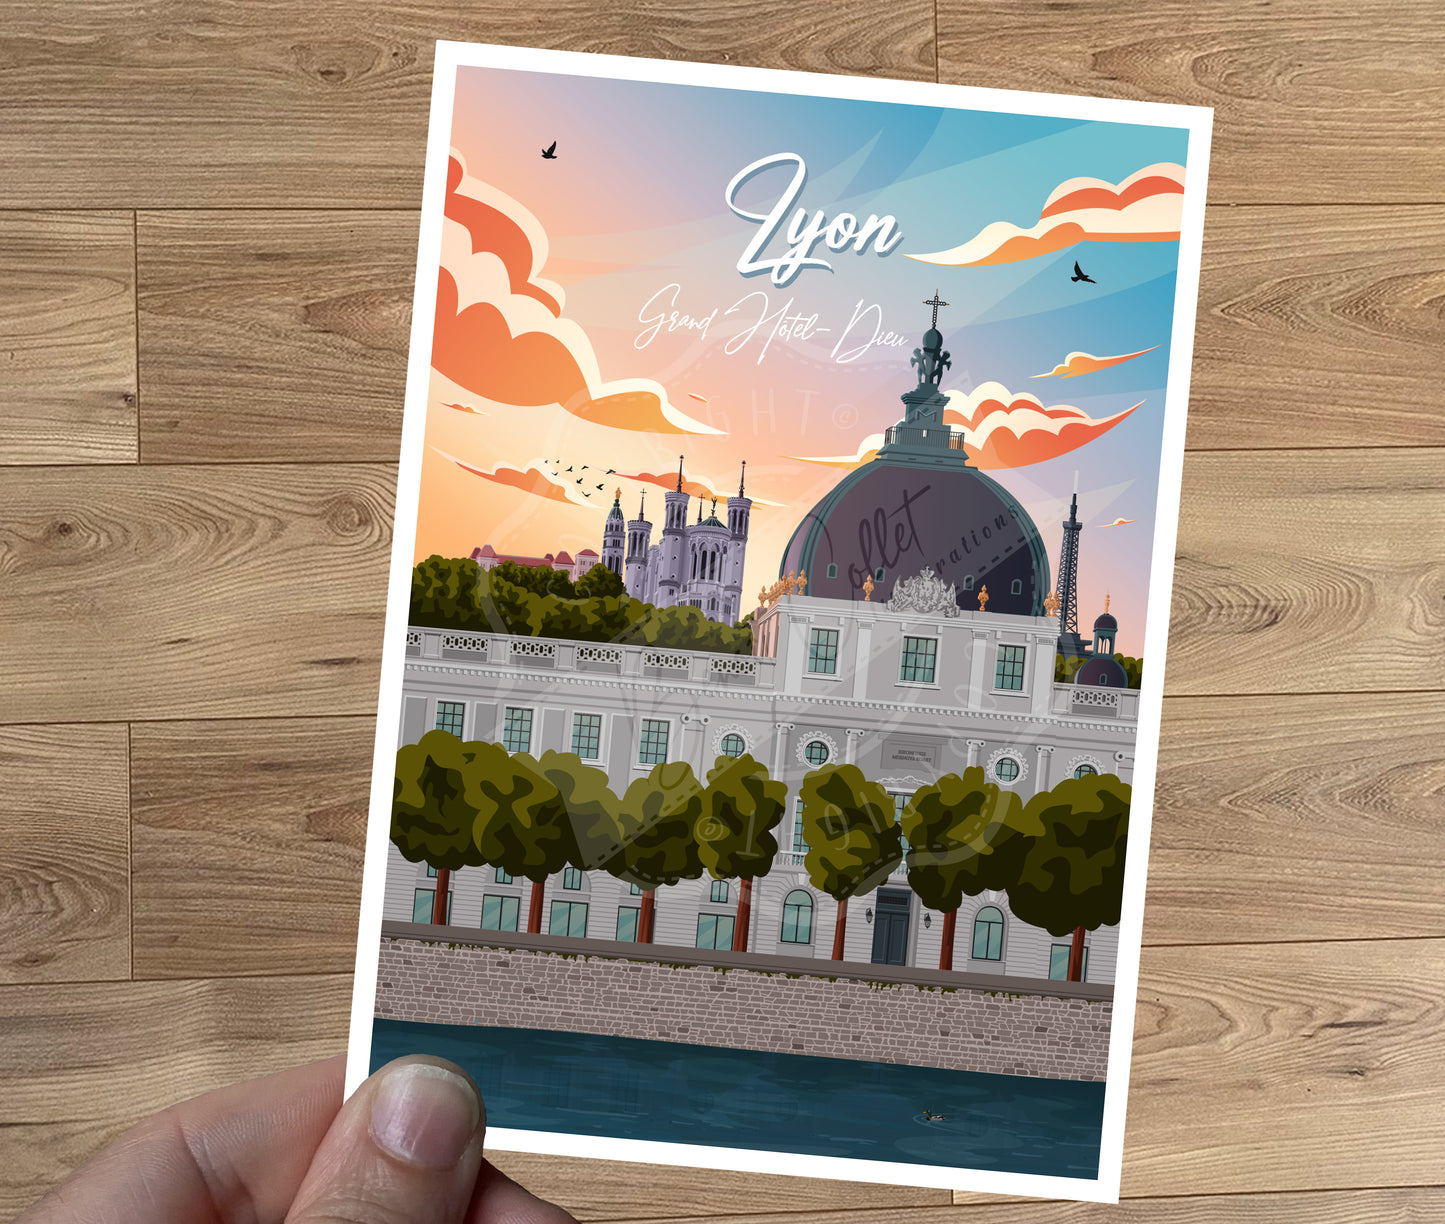 Lyon - Grand Hôtel-Dieu (Carte postale)